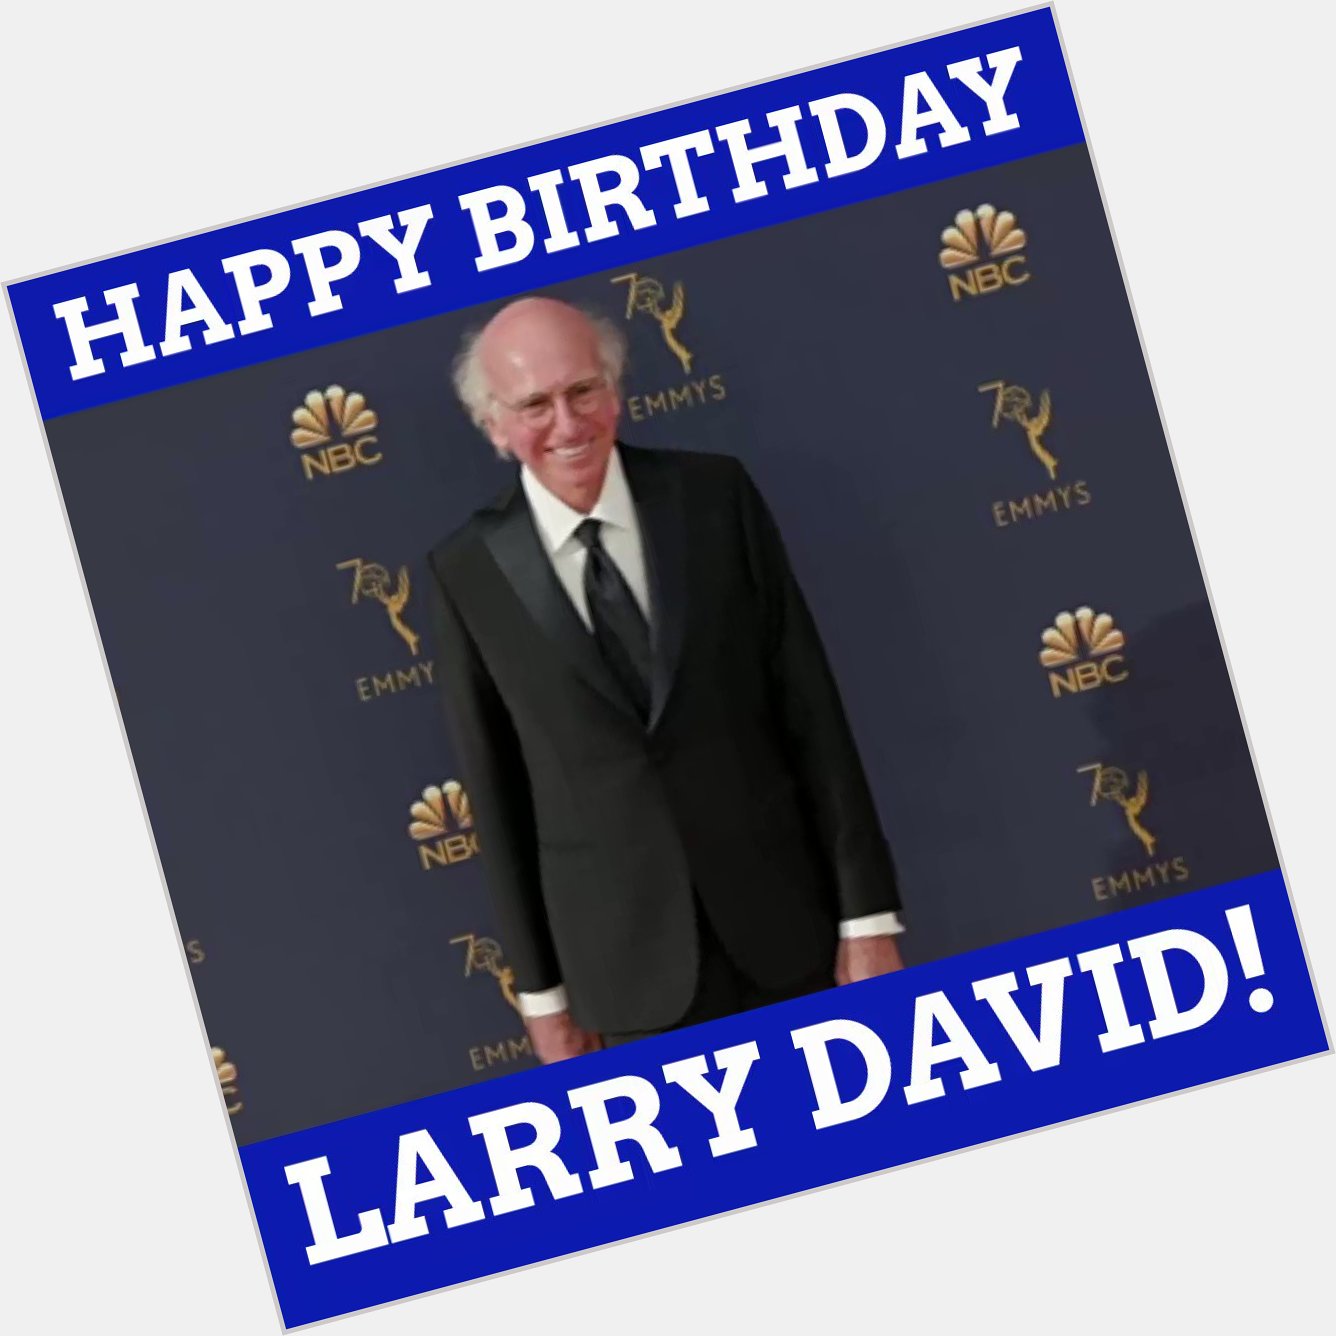 Happy birthday, Larry David!  